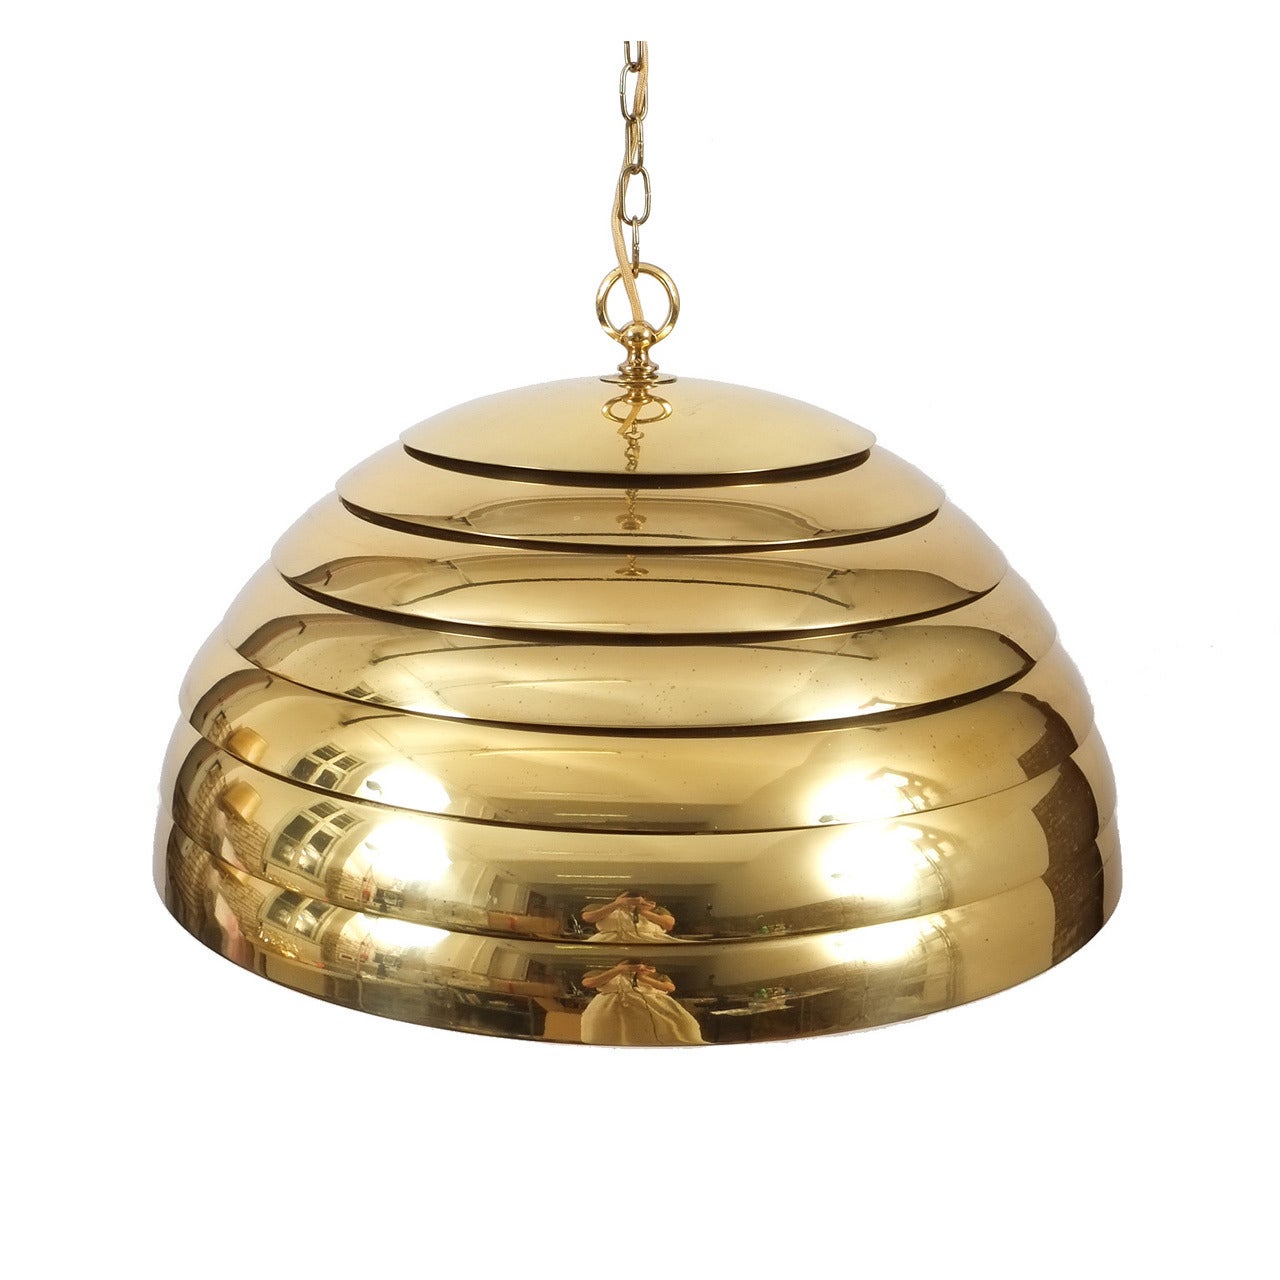 Florian Schulz Large Behive Brass Dome Pendant Lamp Translucent Diffuser, 1960